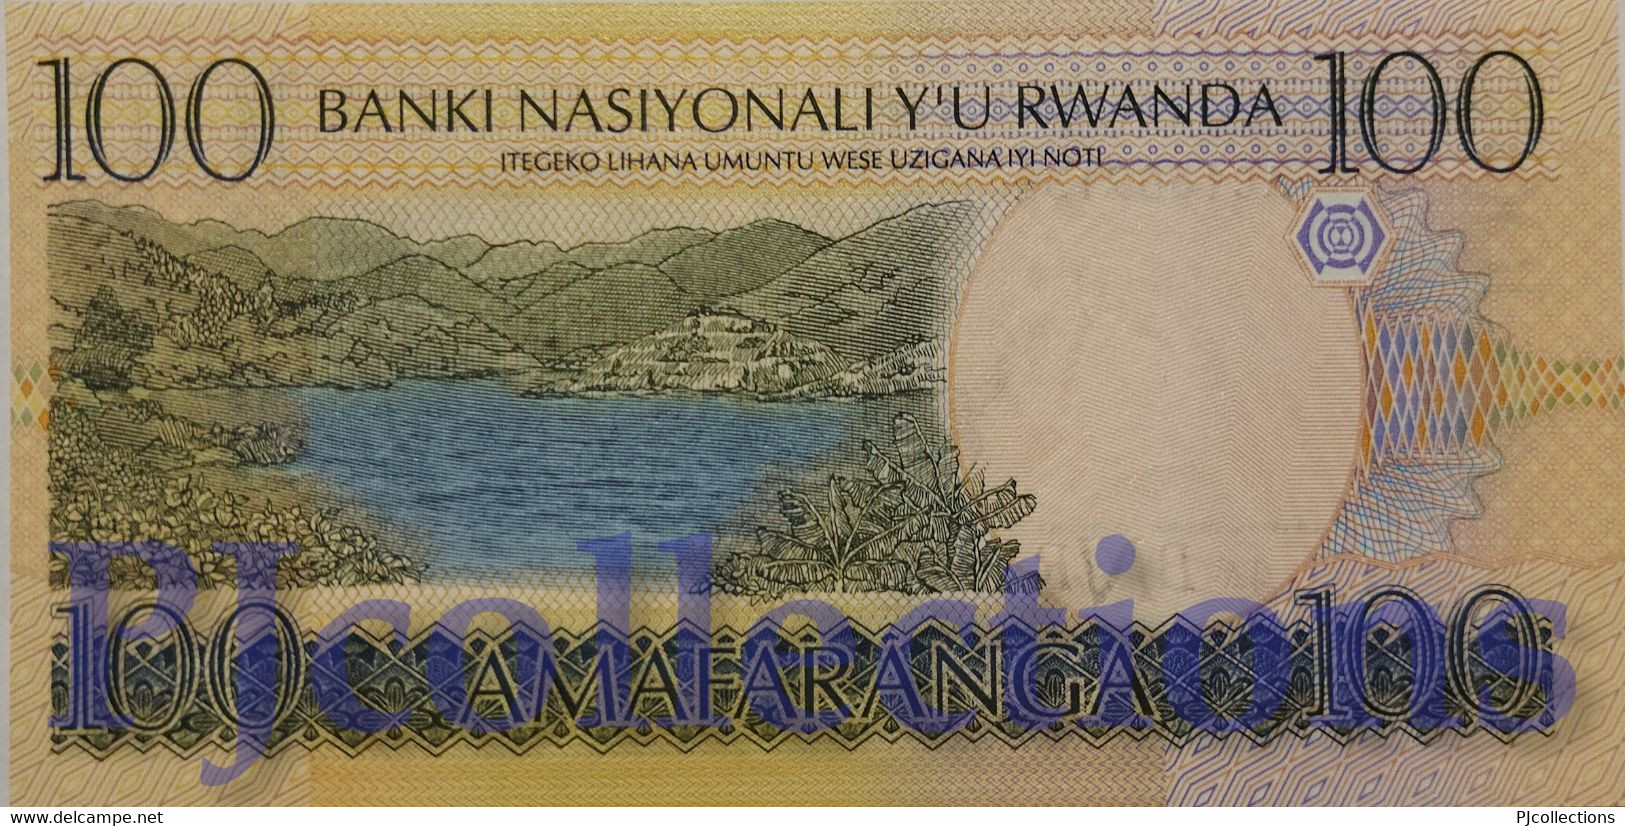 RWANDA 100 FRANCS 2003 PICK 29a UNC PREFIX "AA" - Rwanda